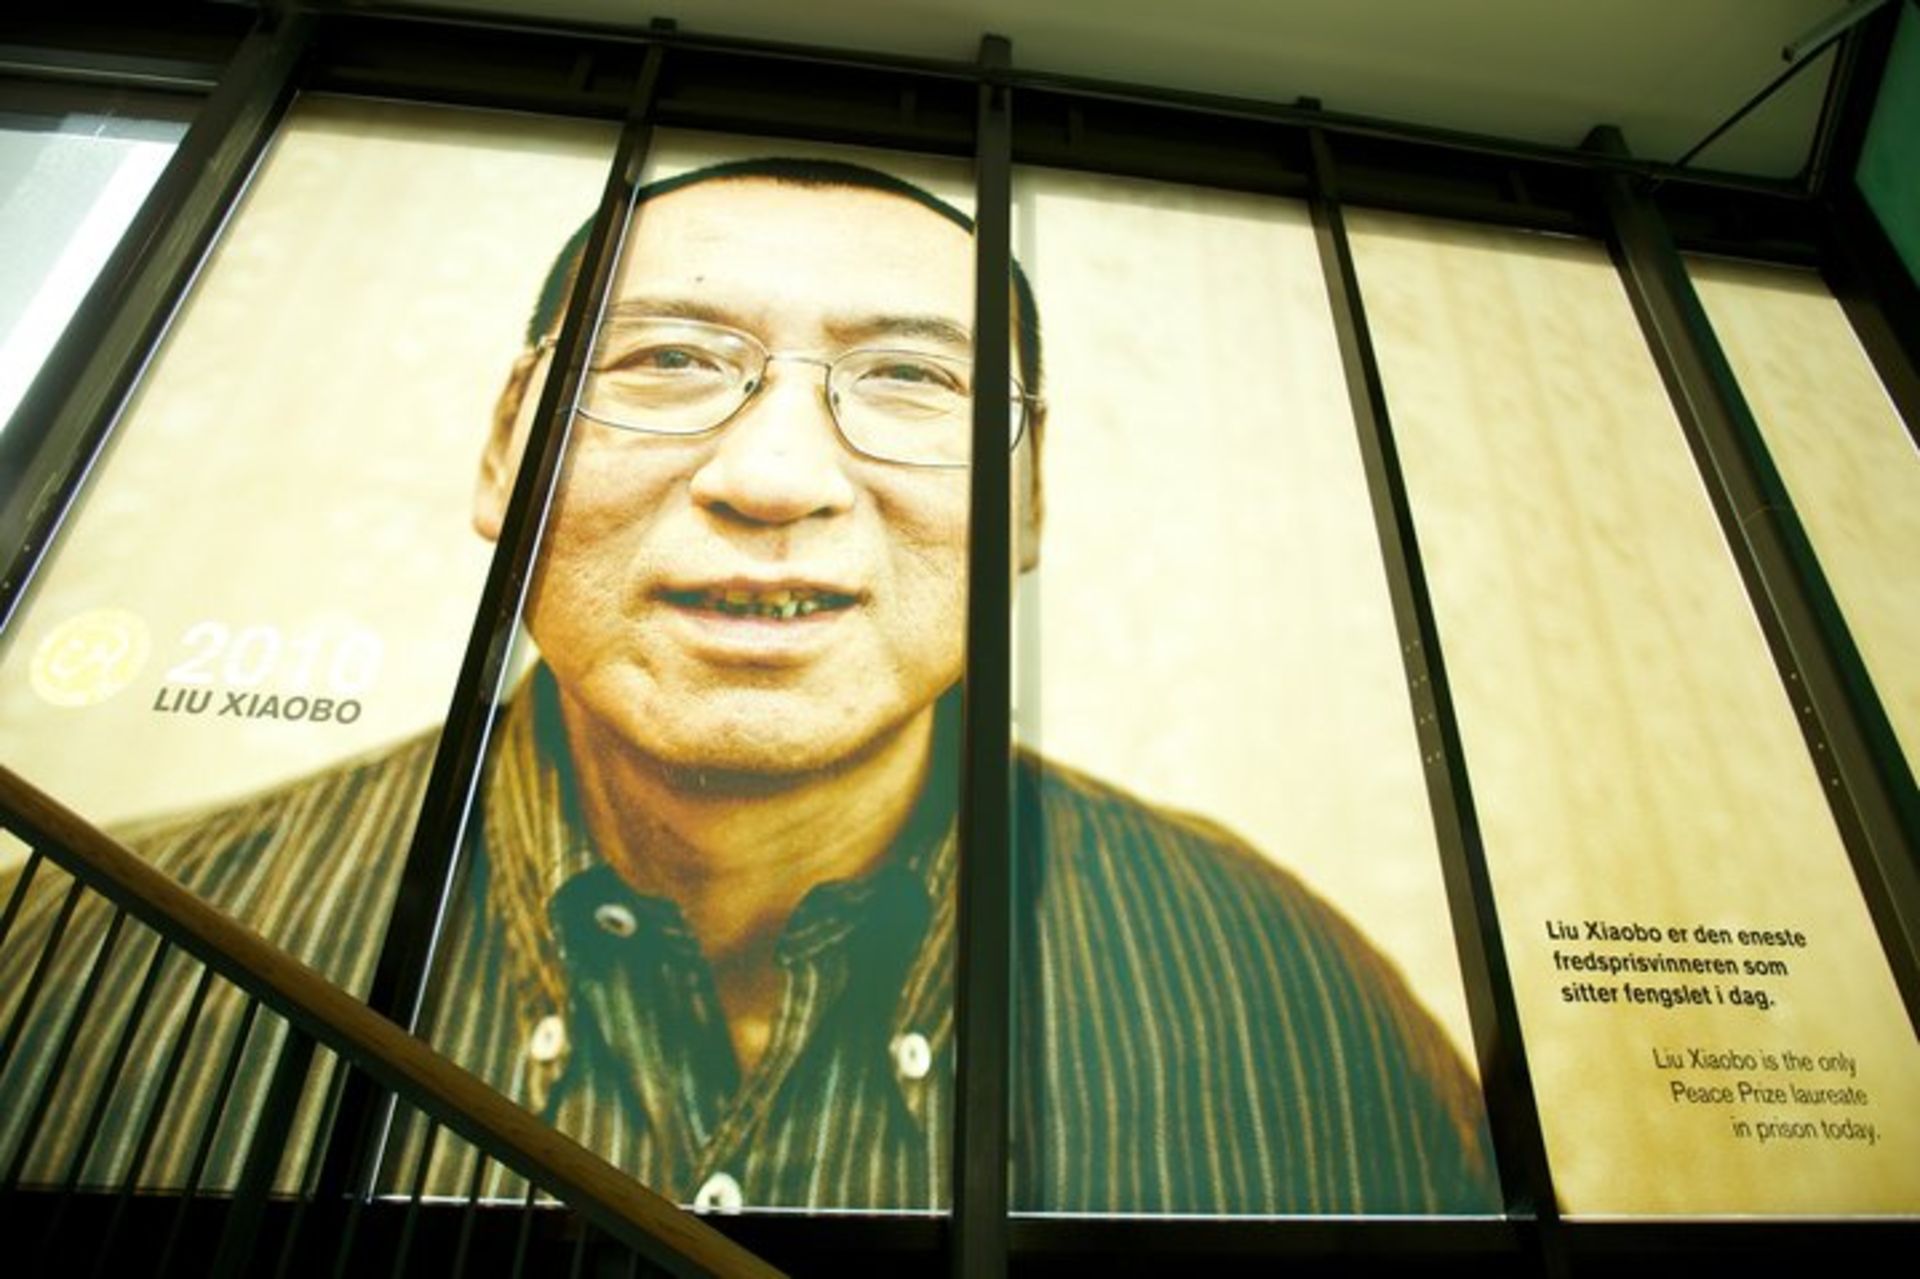 مرجع متخصصين ايران ليو شيائوبو / Liu Xiaobo